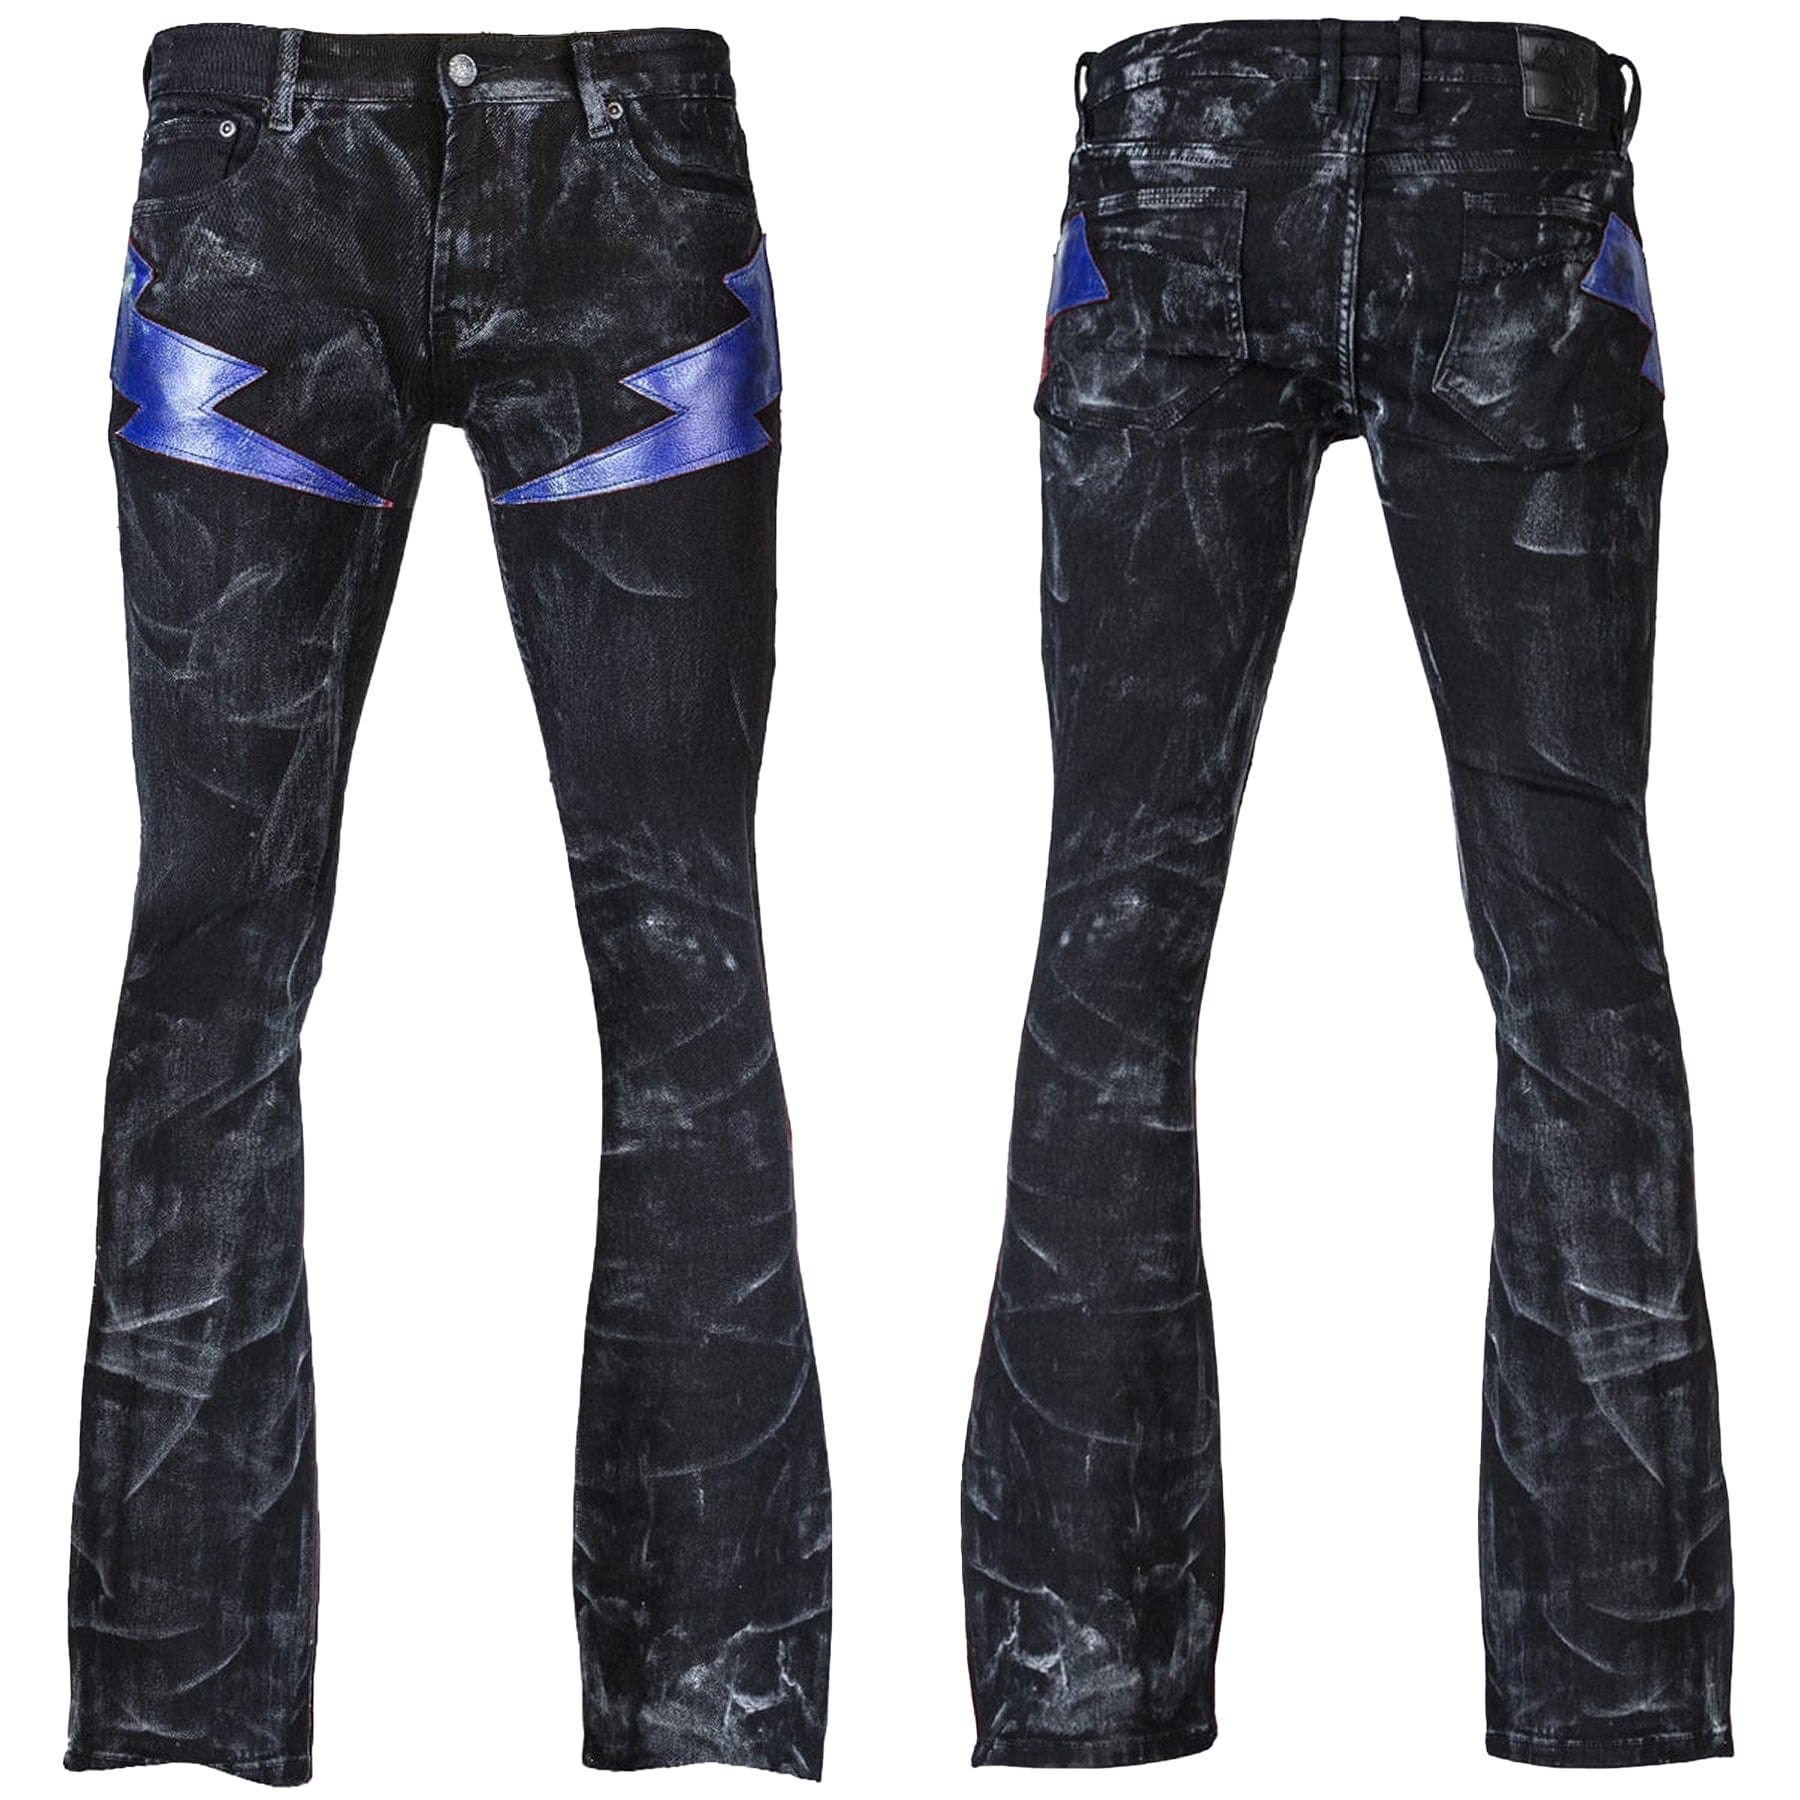 Custom Chop Shop Pants Wornstar Custom Jeans - Thunderstruck Cobalt Blue